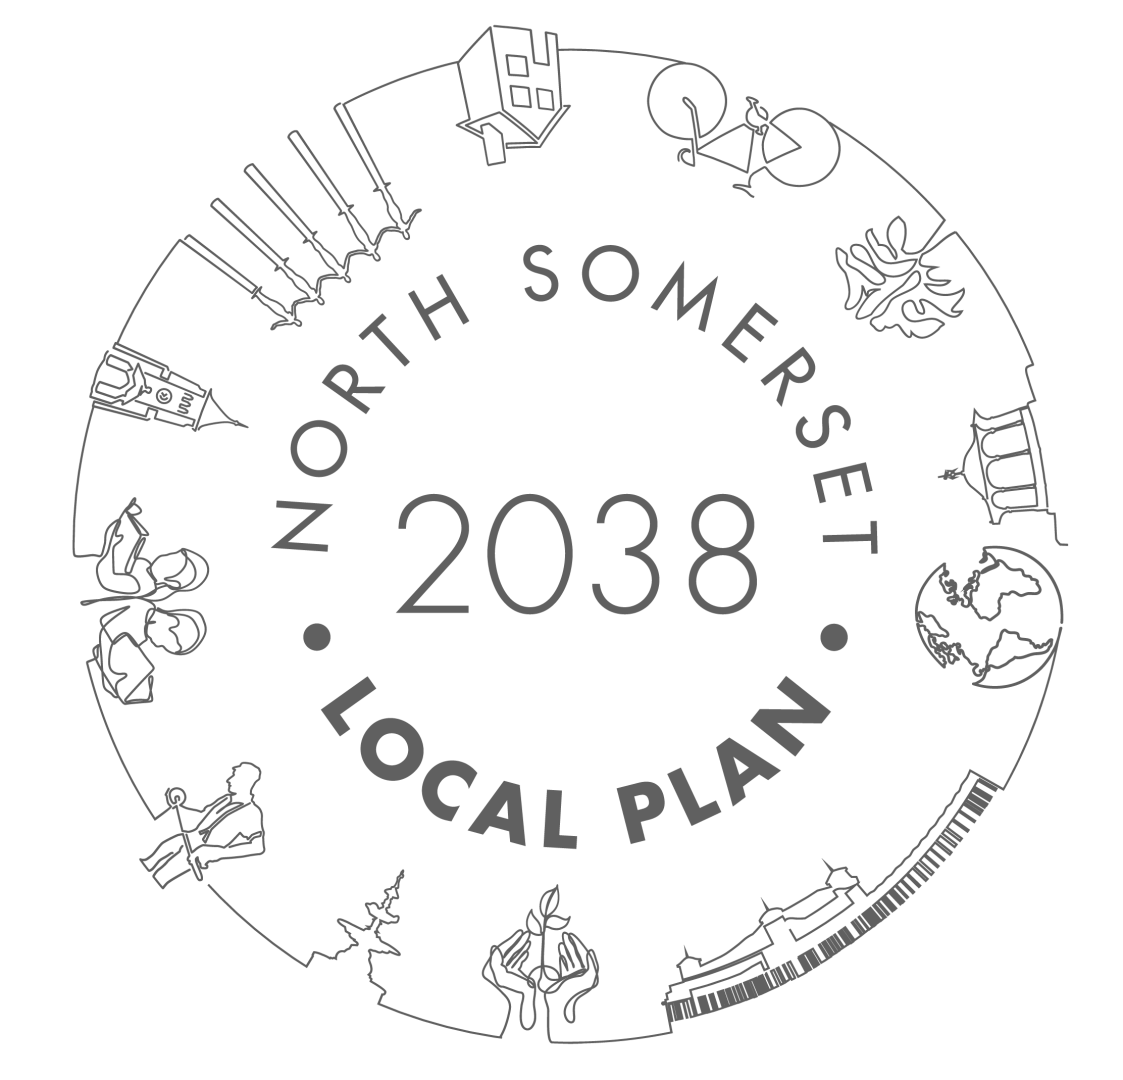 North Somerset Local Plan 2038 with various North Somerset landmarks